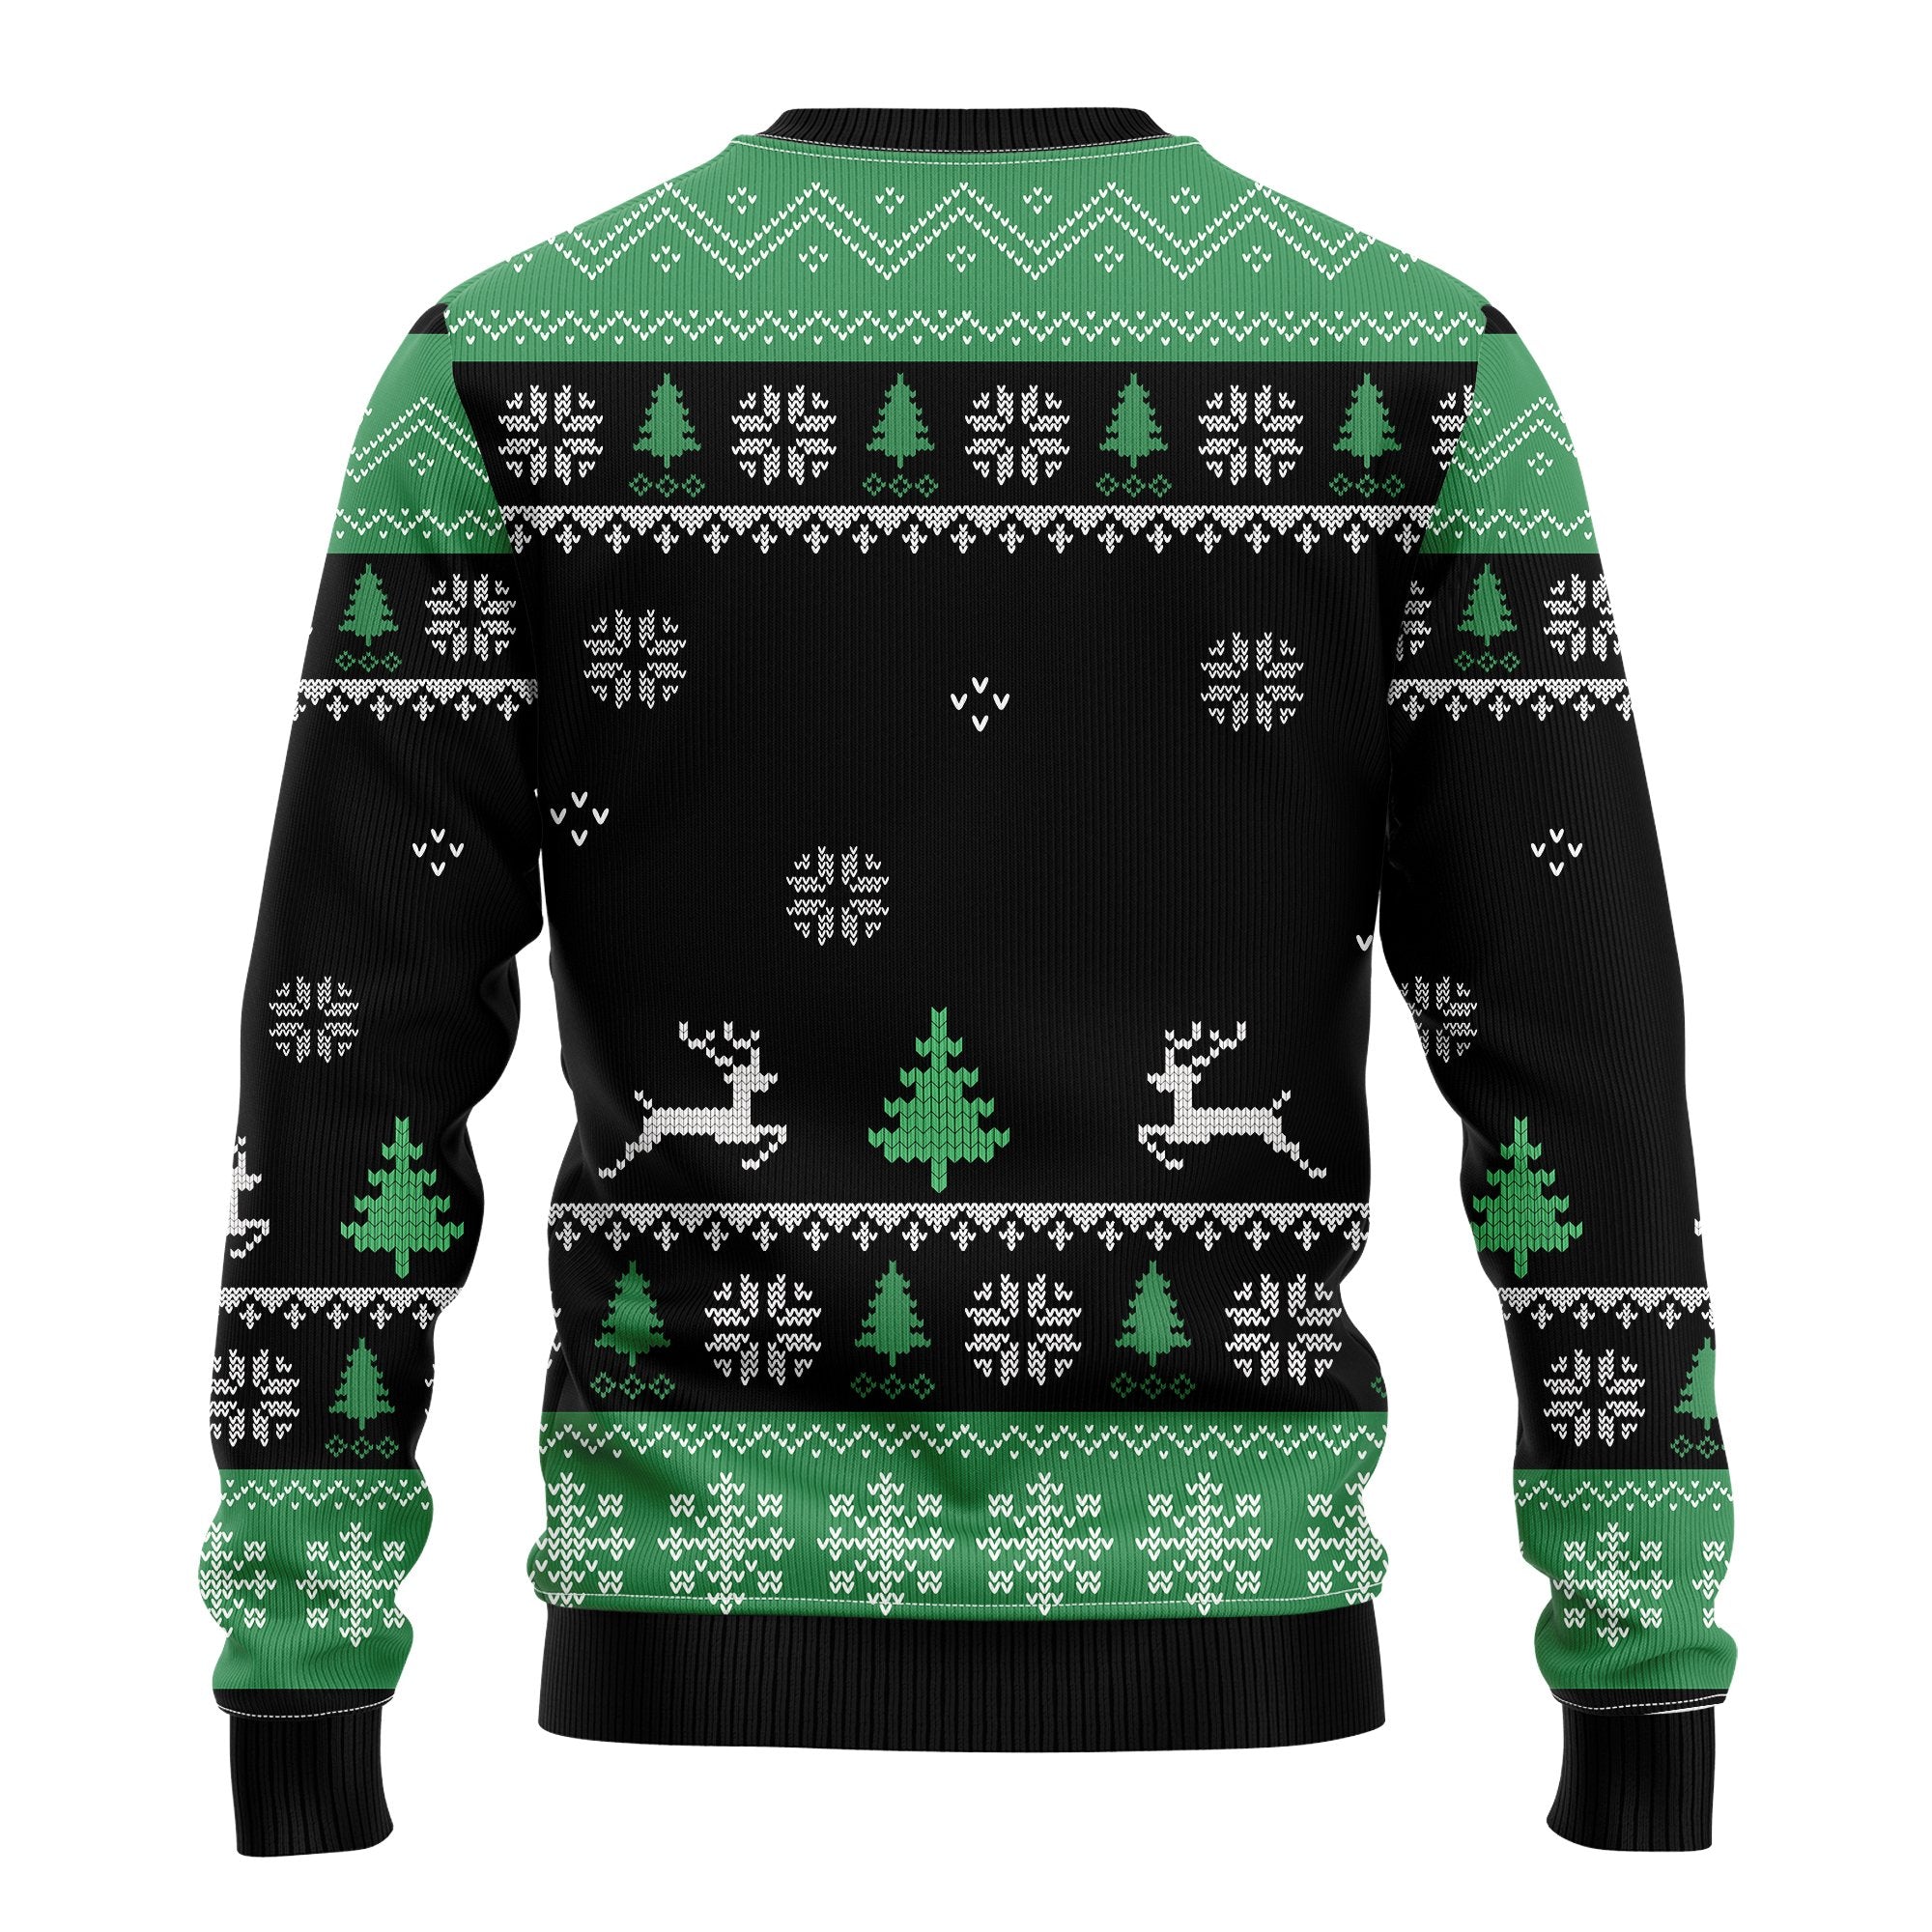 Leonardo Dicaprio Drinking Meme Ugly Christmas Sweater Amazing Gift Idea Thanksgiving Gift